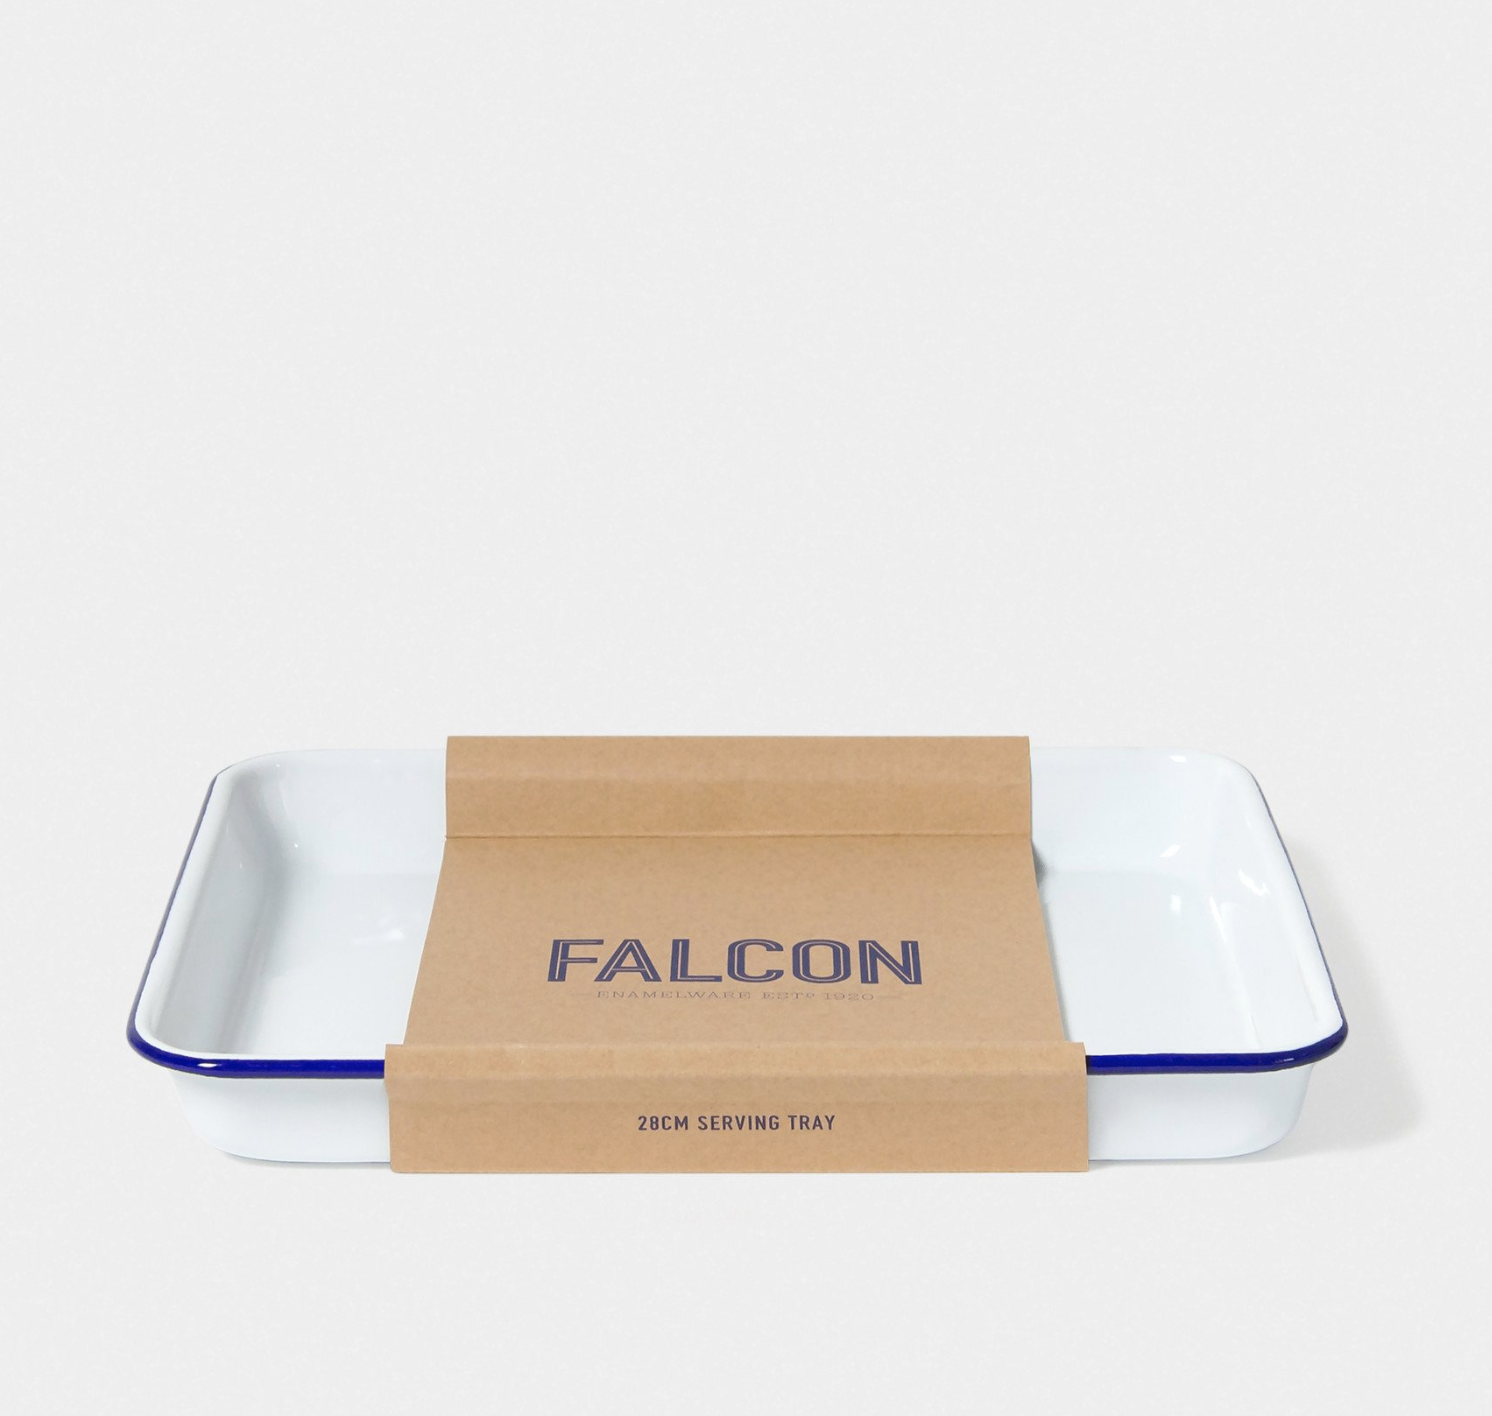 Falcon Enamelware Tray